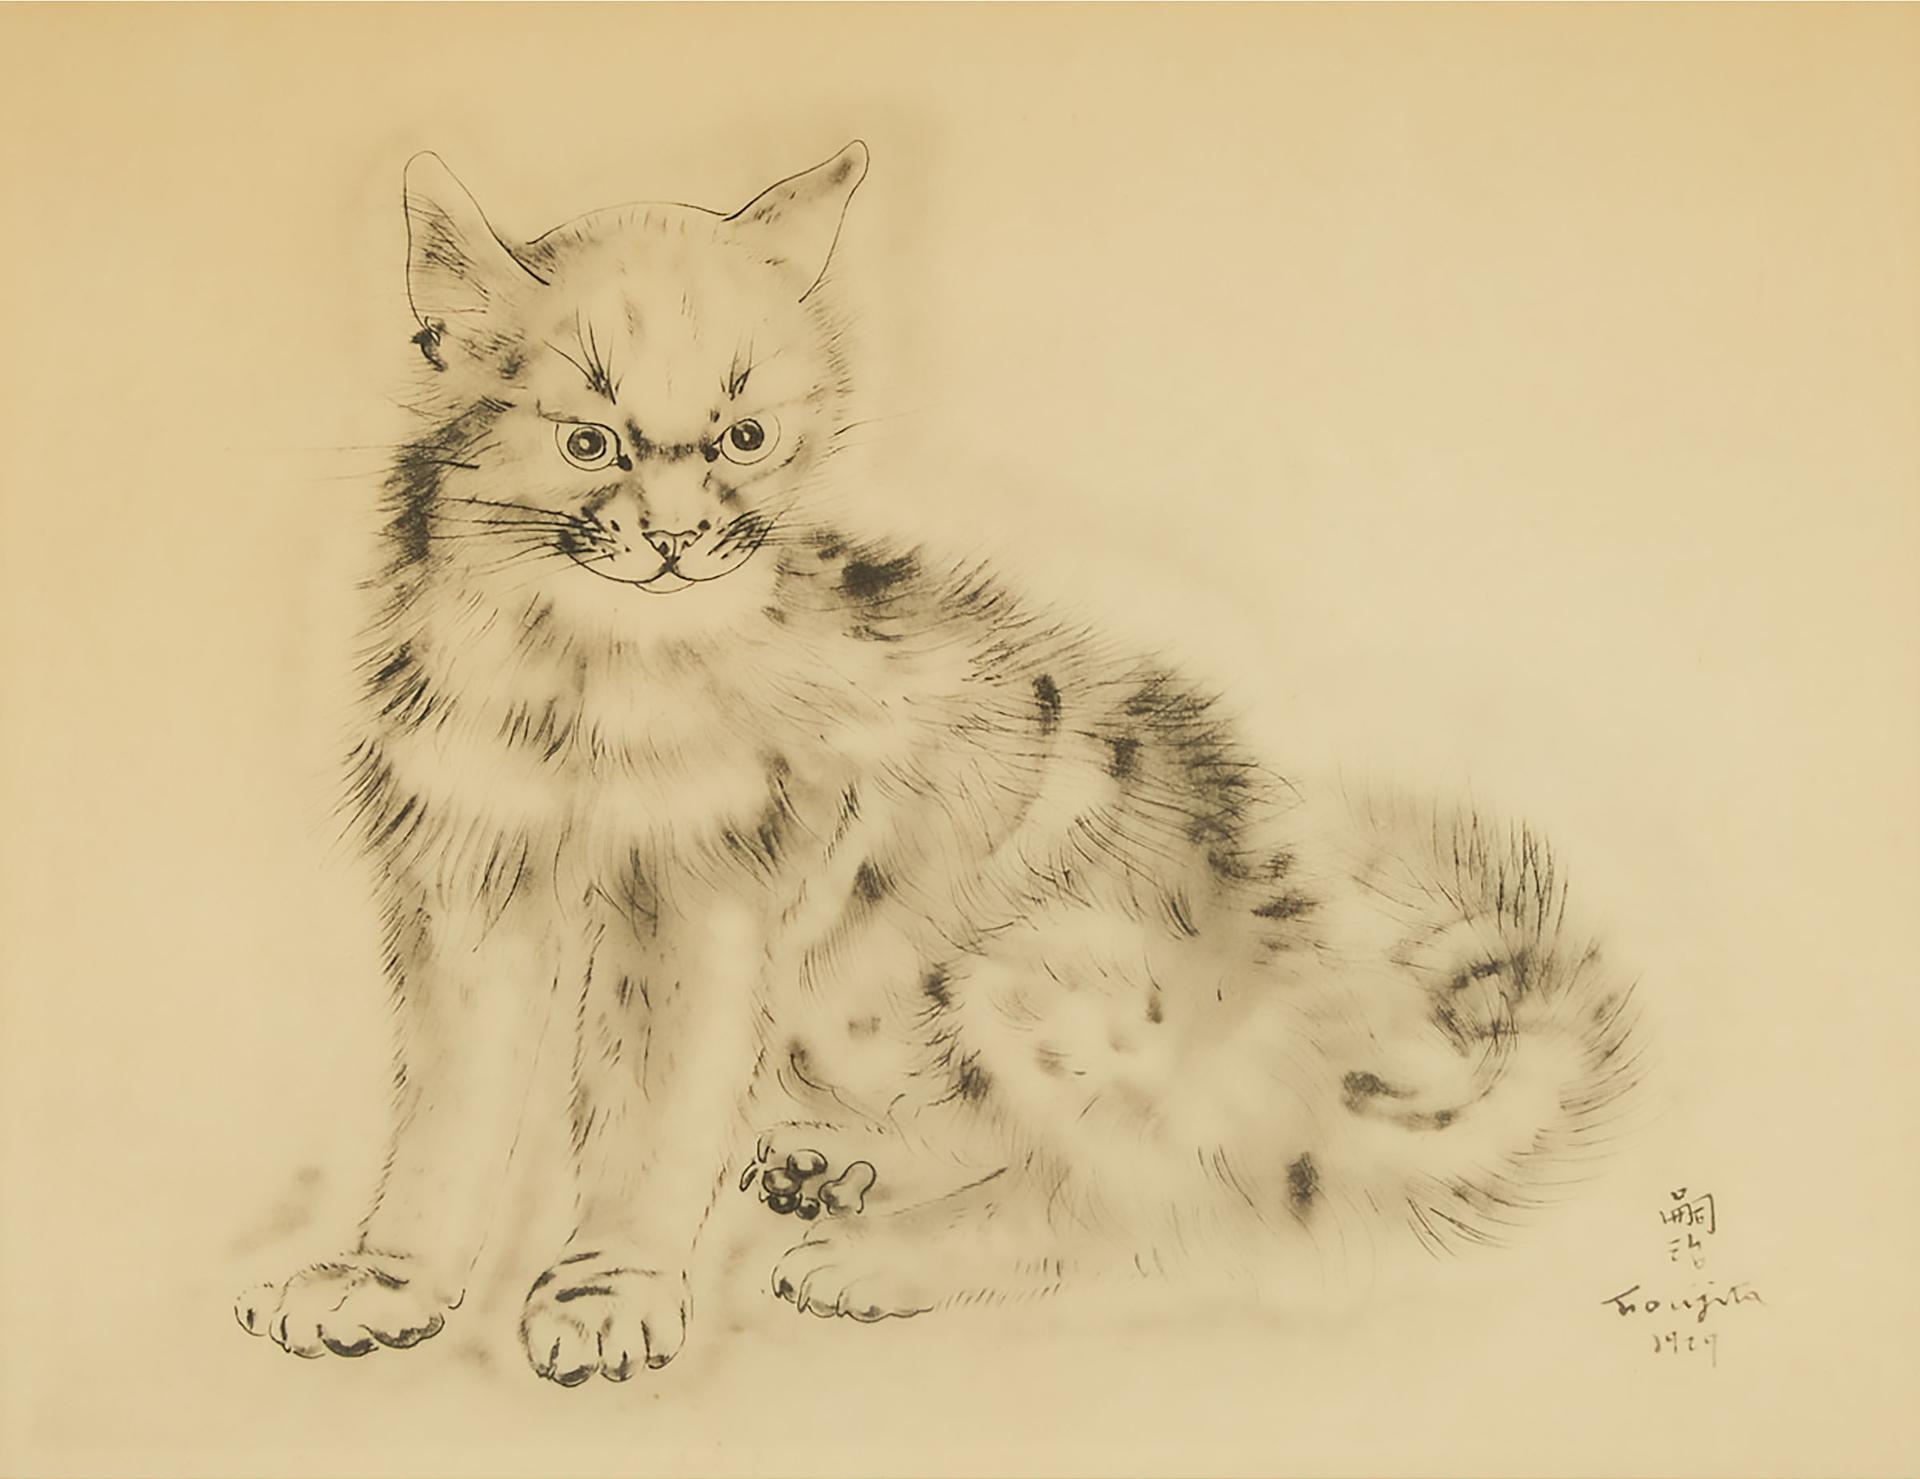 Léonard Tsuguharu Foujita (1886-1968) - Alaciel (From A Book Of Cats), 1929 [buisson Ii.30.127]